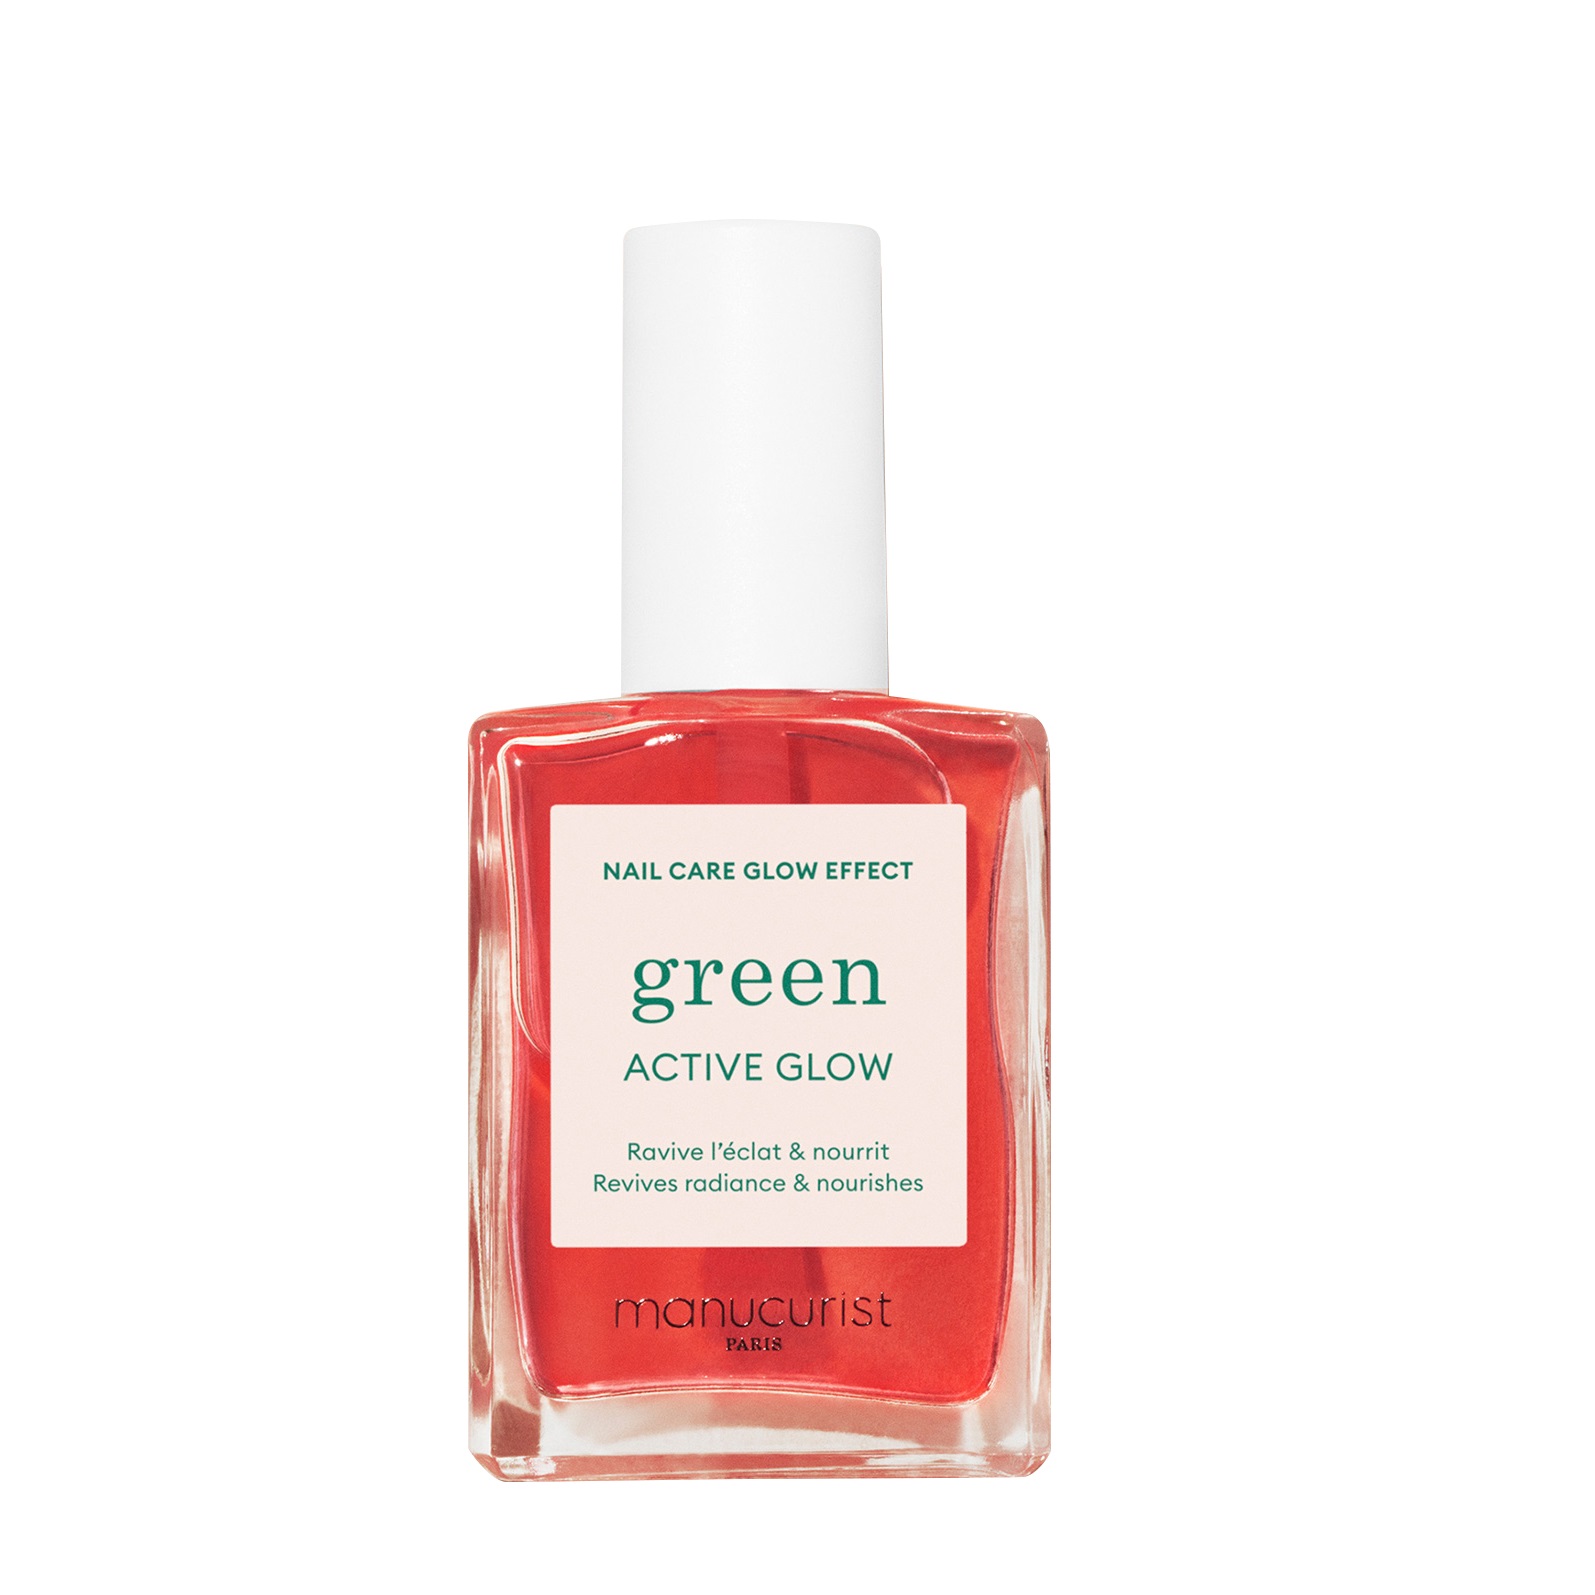 Green flashTM Box Red Cherry x Hortencia Manucurist